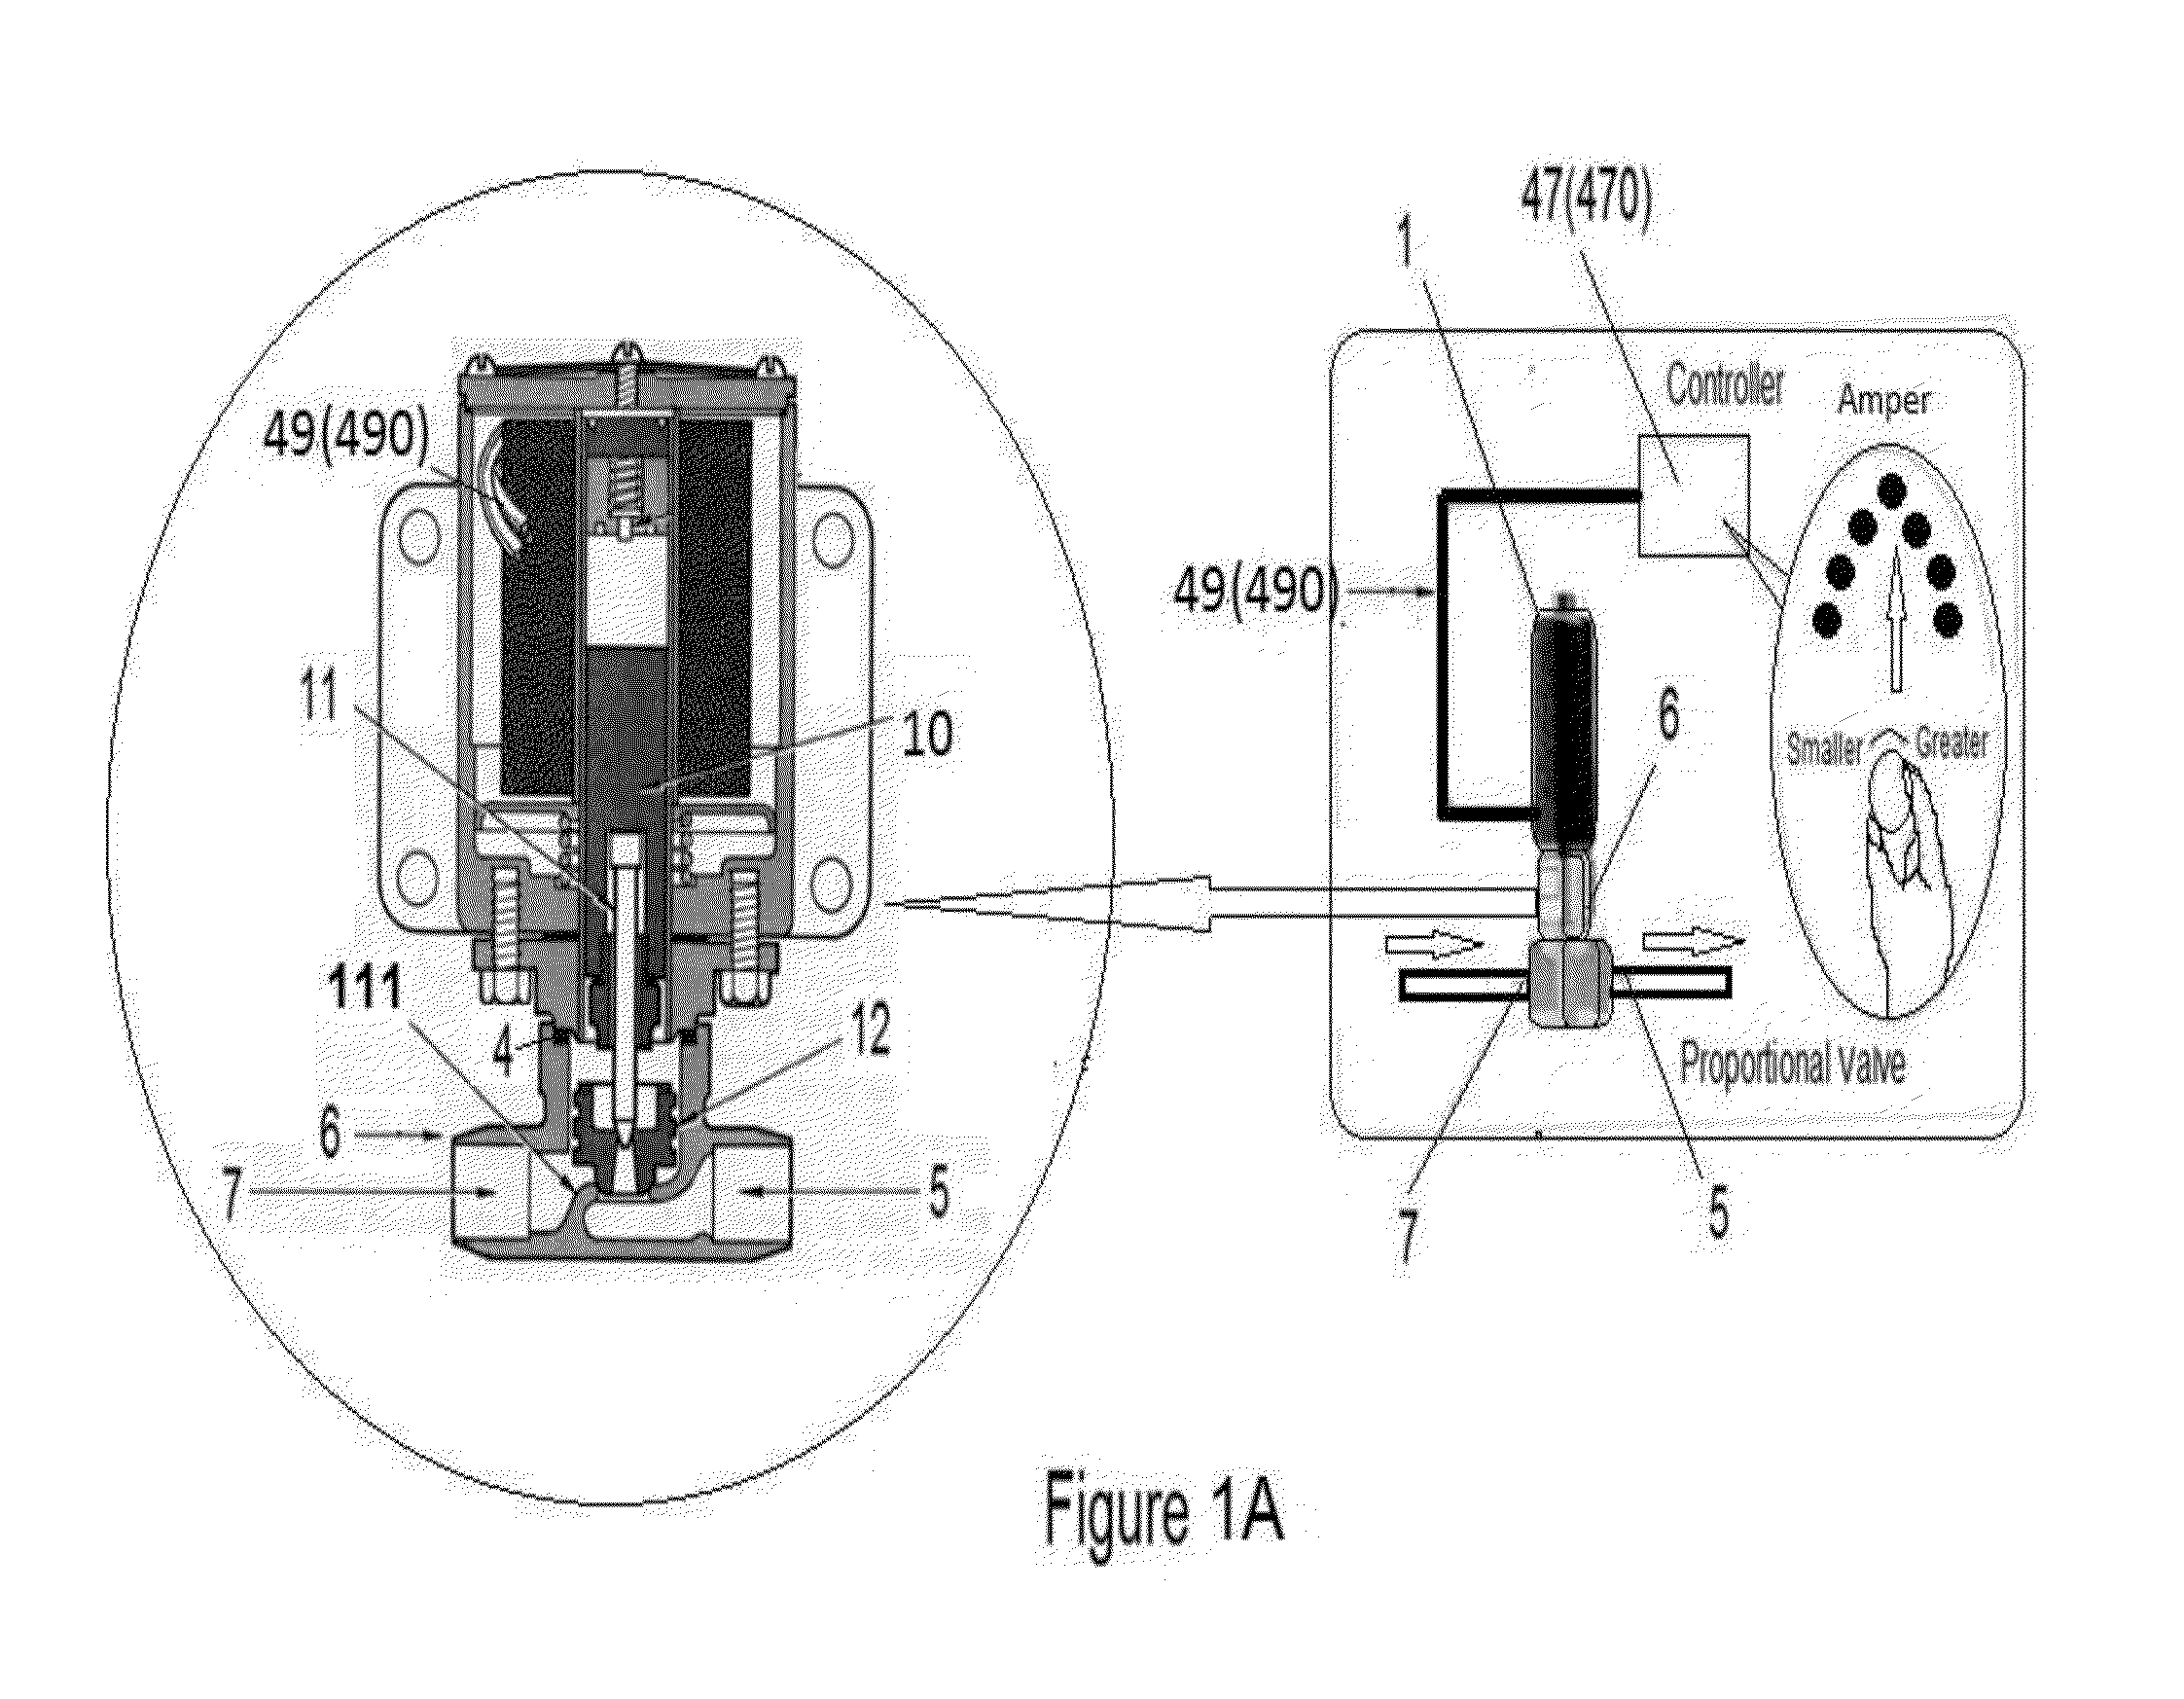 Piezoelectric valve and pump actuator